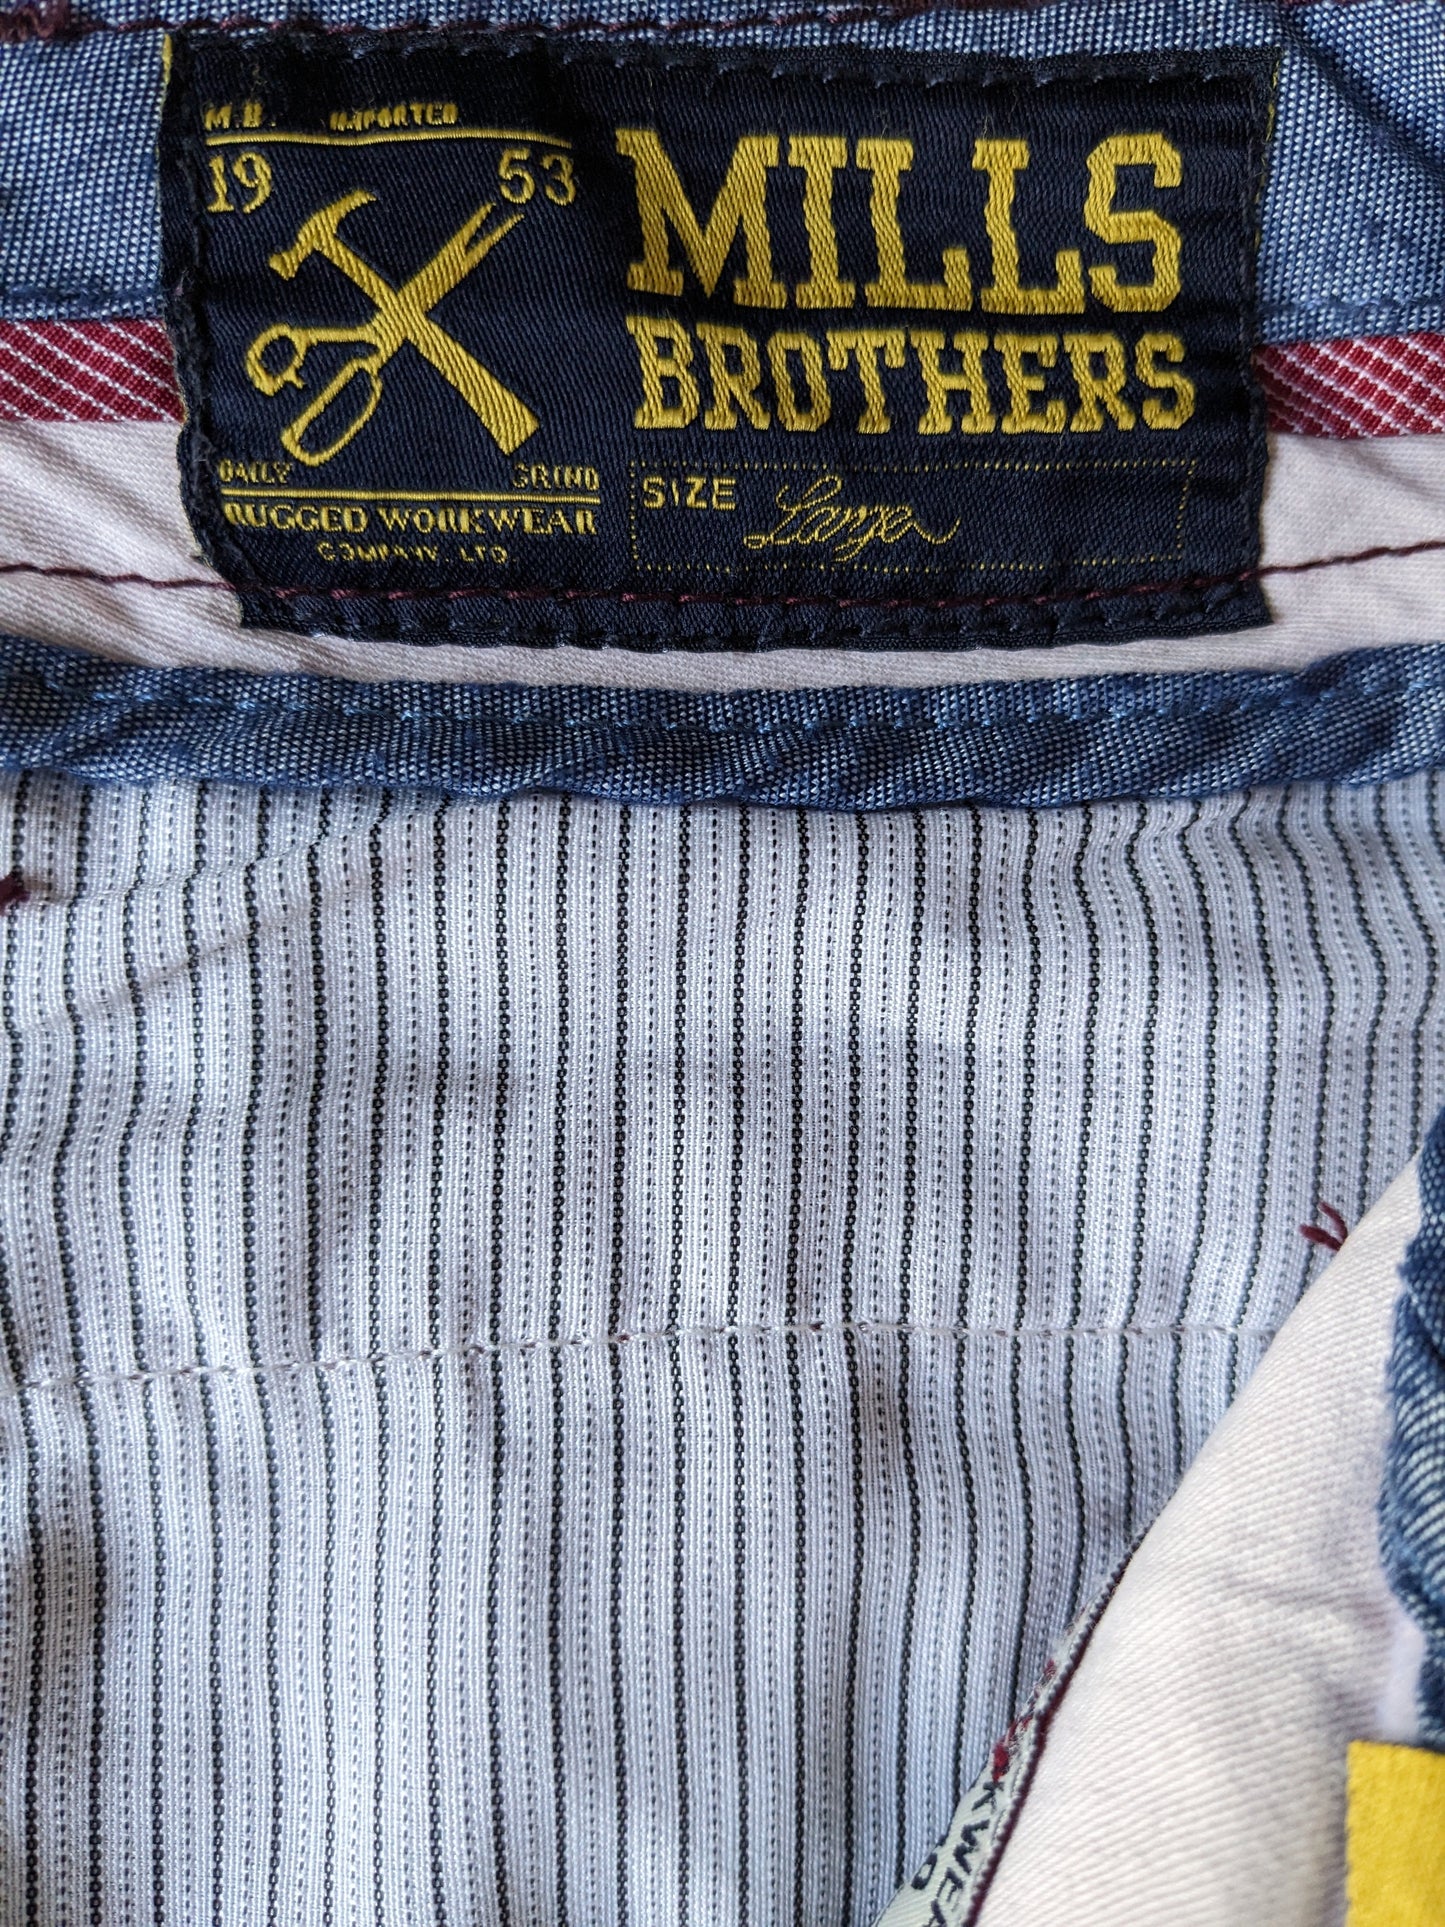 Mills Brothers broek met Bretels accessoires. Bordeaux gekleurd. Maat L.